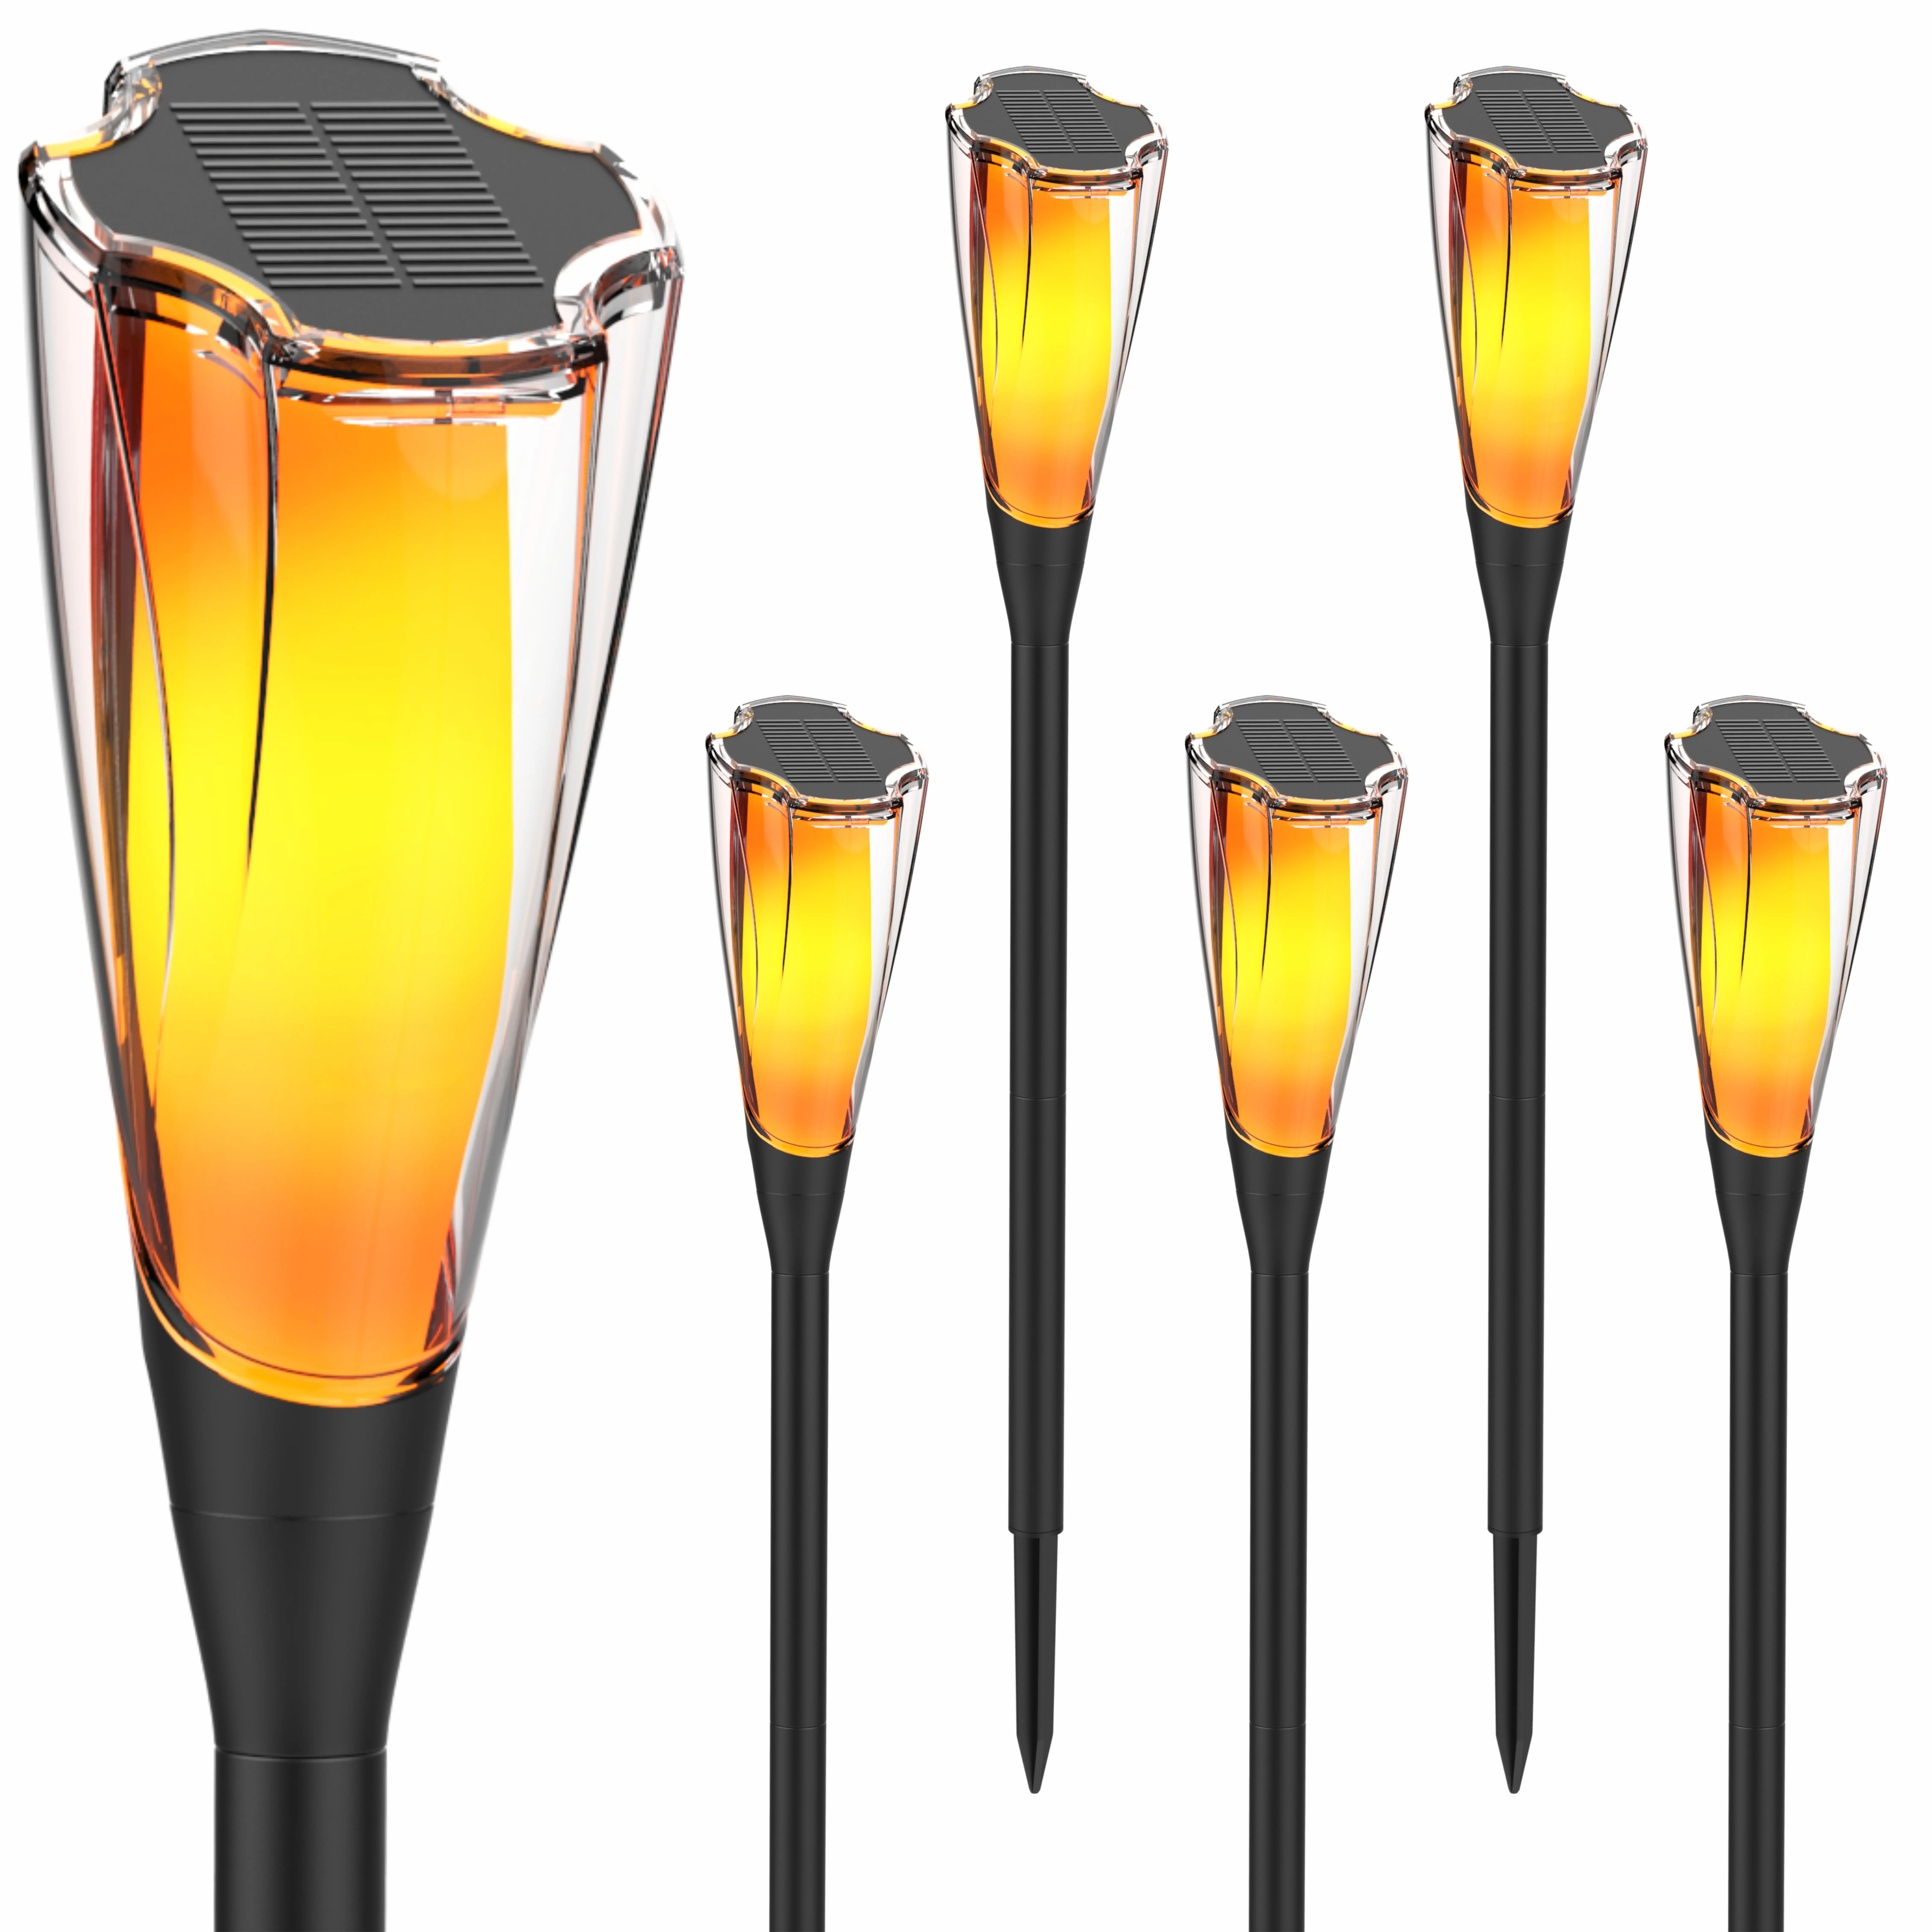 Realistic Dancing Flames Abs Ip65 Waterproof Outdoor Garden Lawn Lamp Solar Torch Light With Flickering Flame